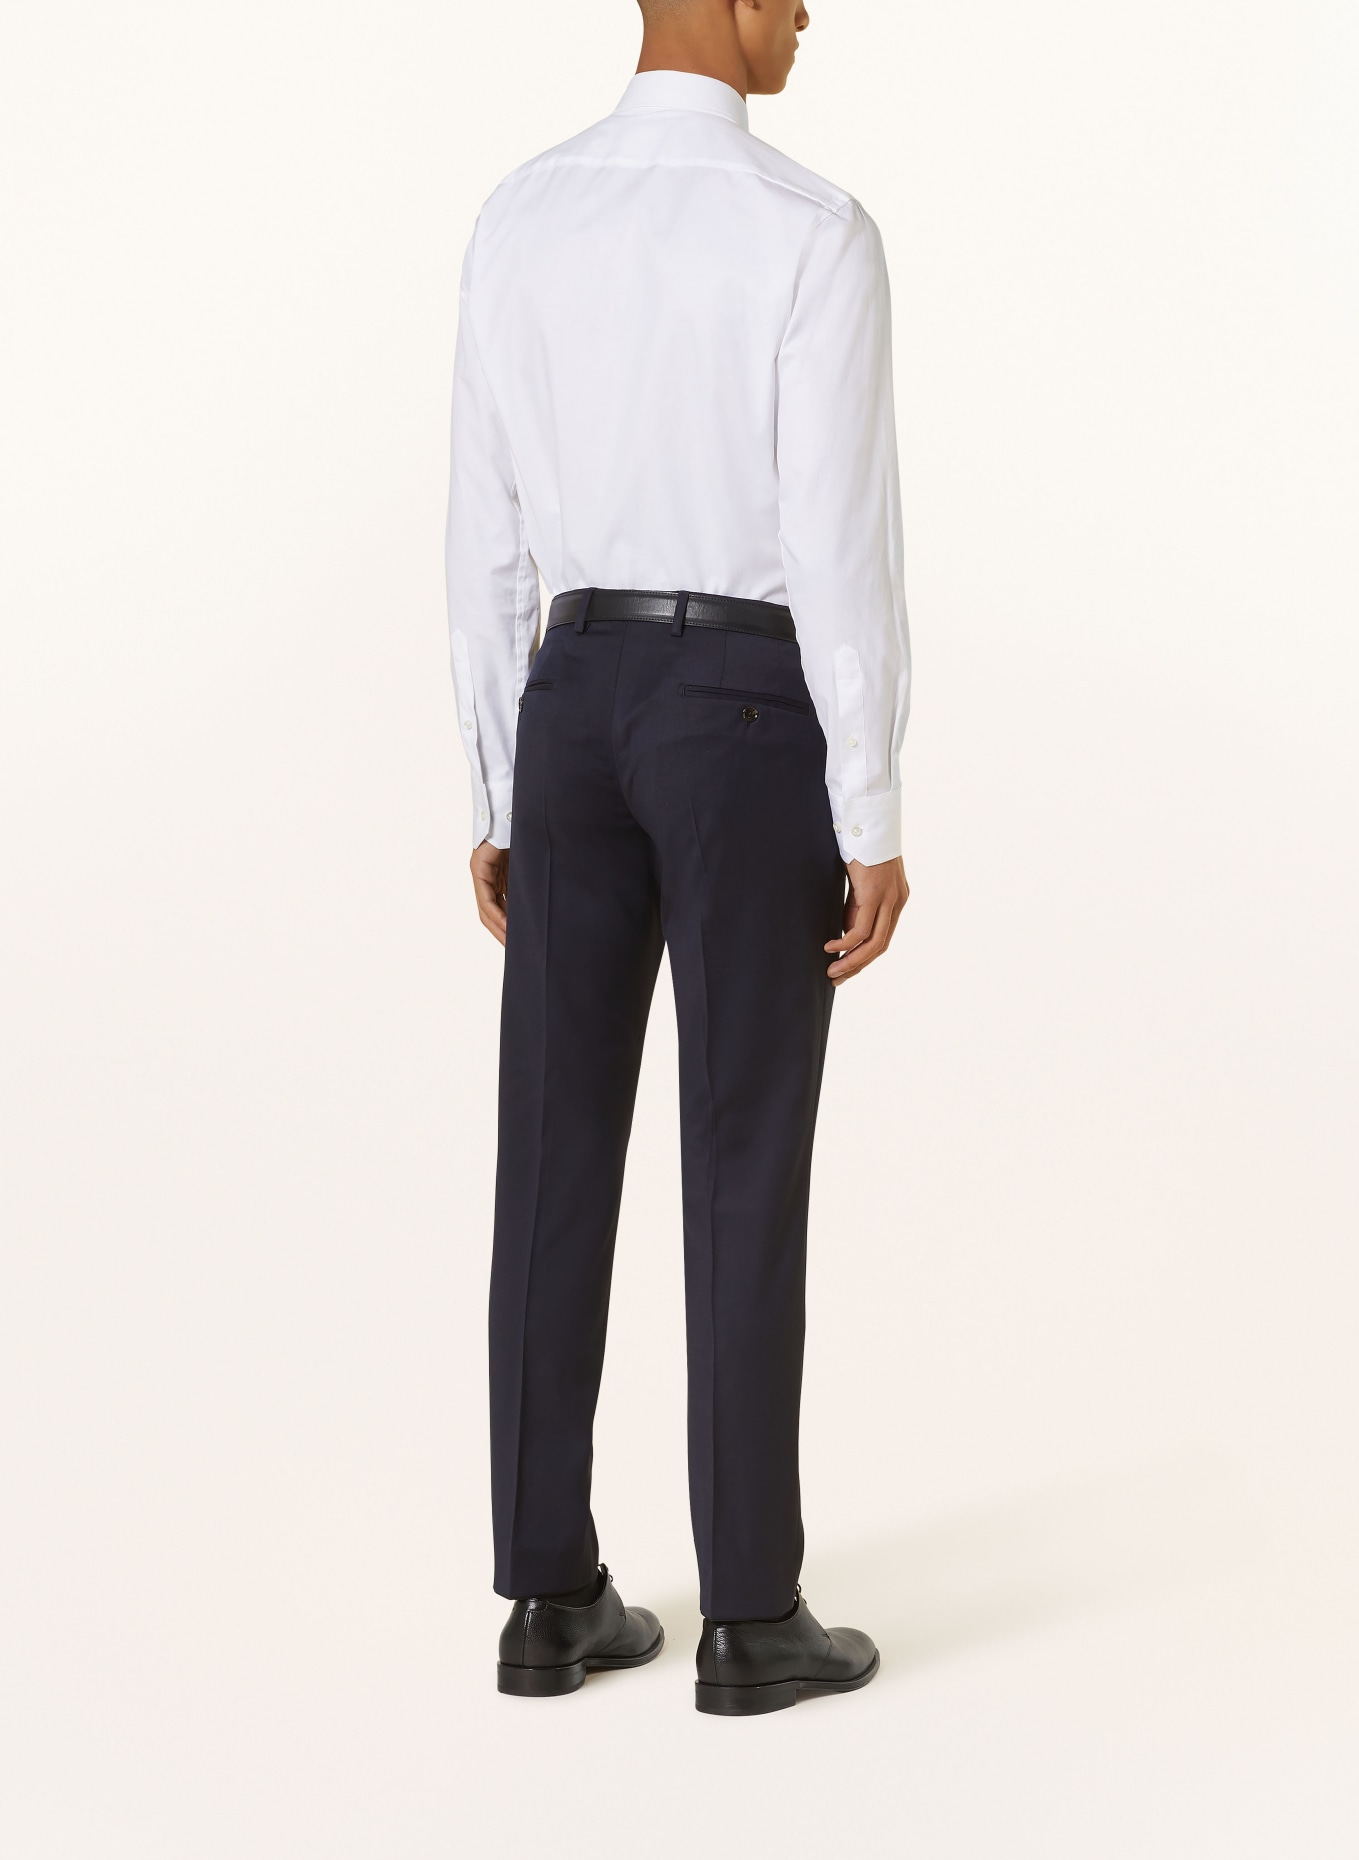 JOOP! Anzughose Slim Fit, Farbe: 401 Dark Blue                  401 (Bild 4)